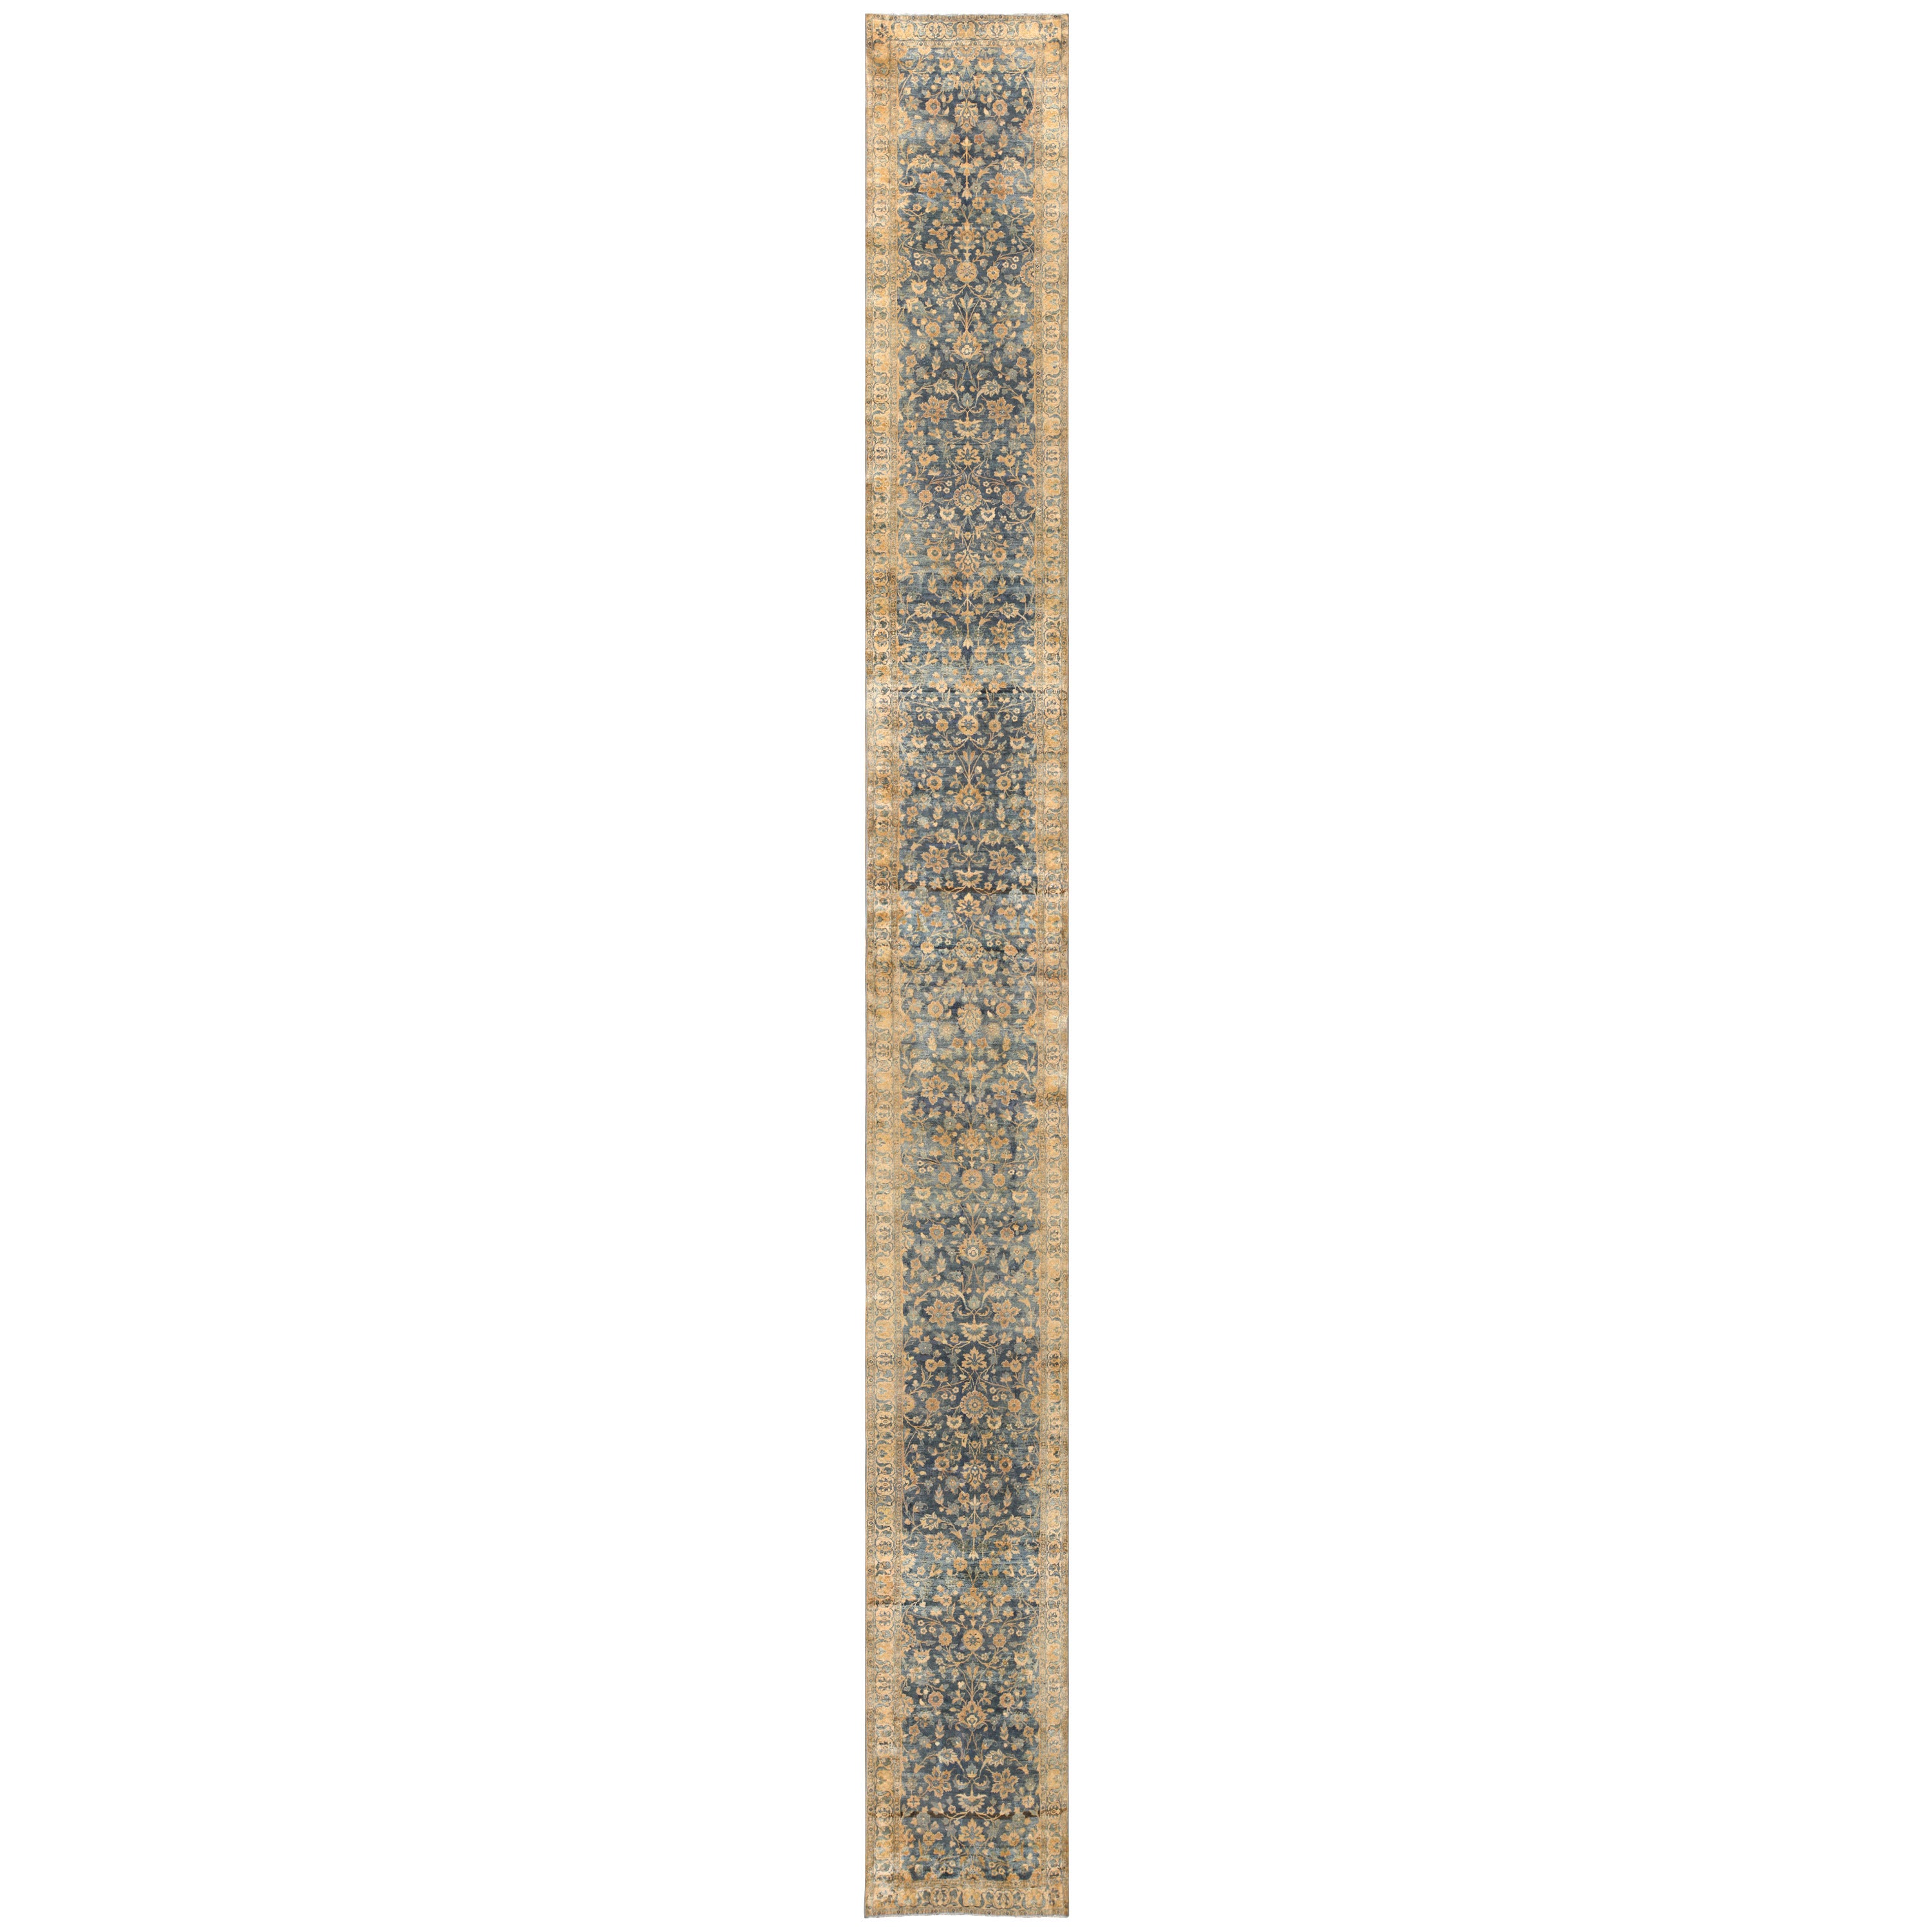 Antique Persian Kerman Runner Rug. Size: 2 ft 5 in x 22 ft (0.74 m x 6.71 m)